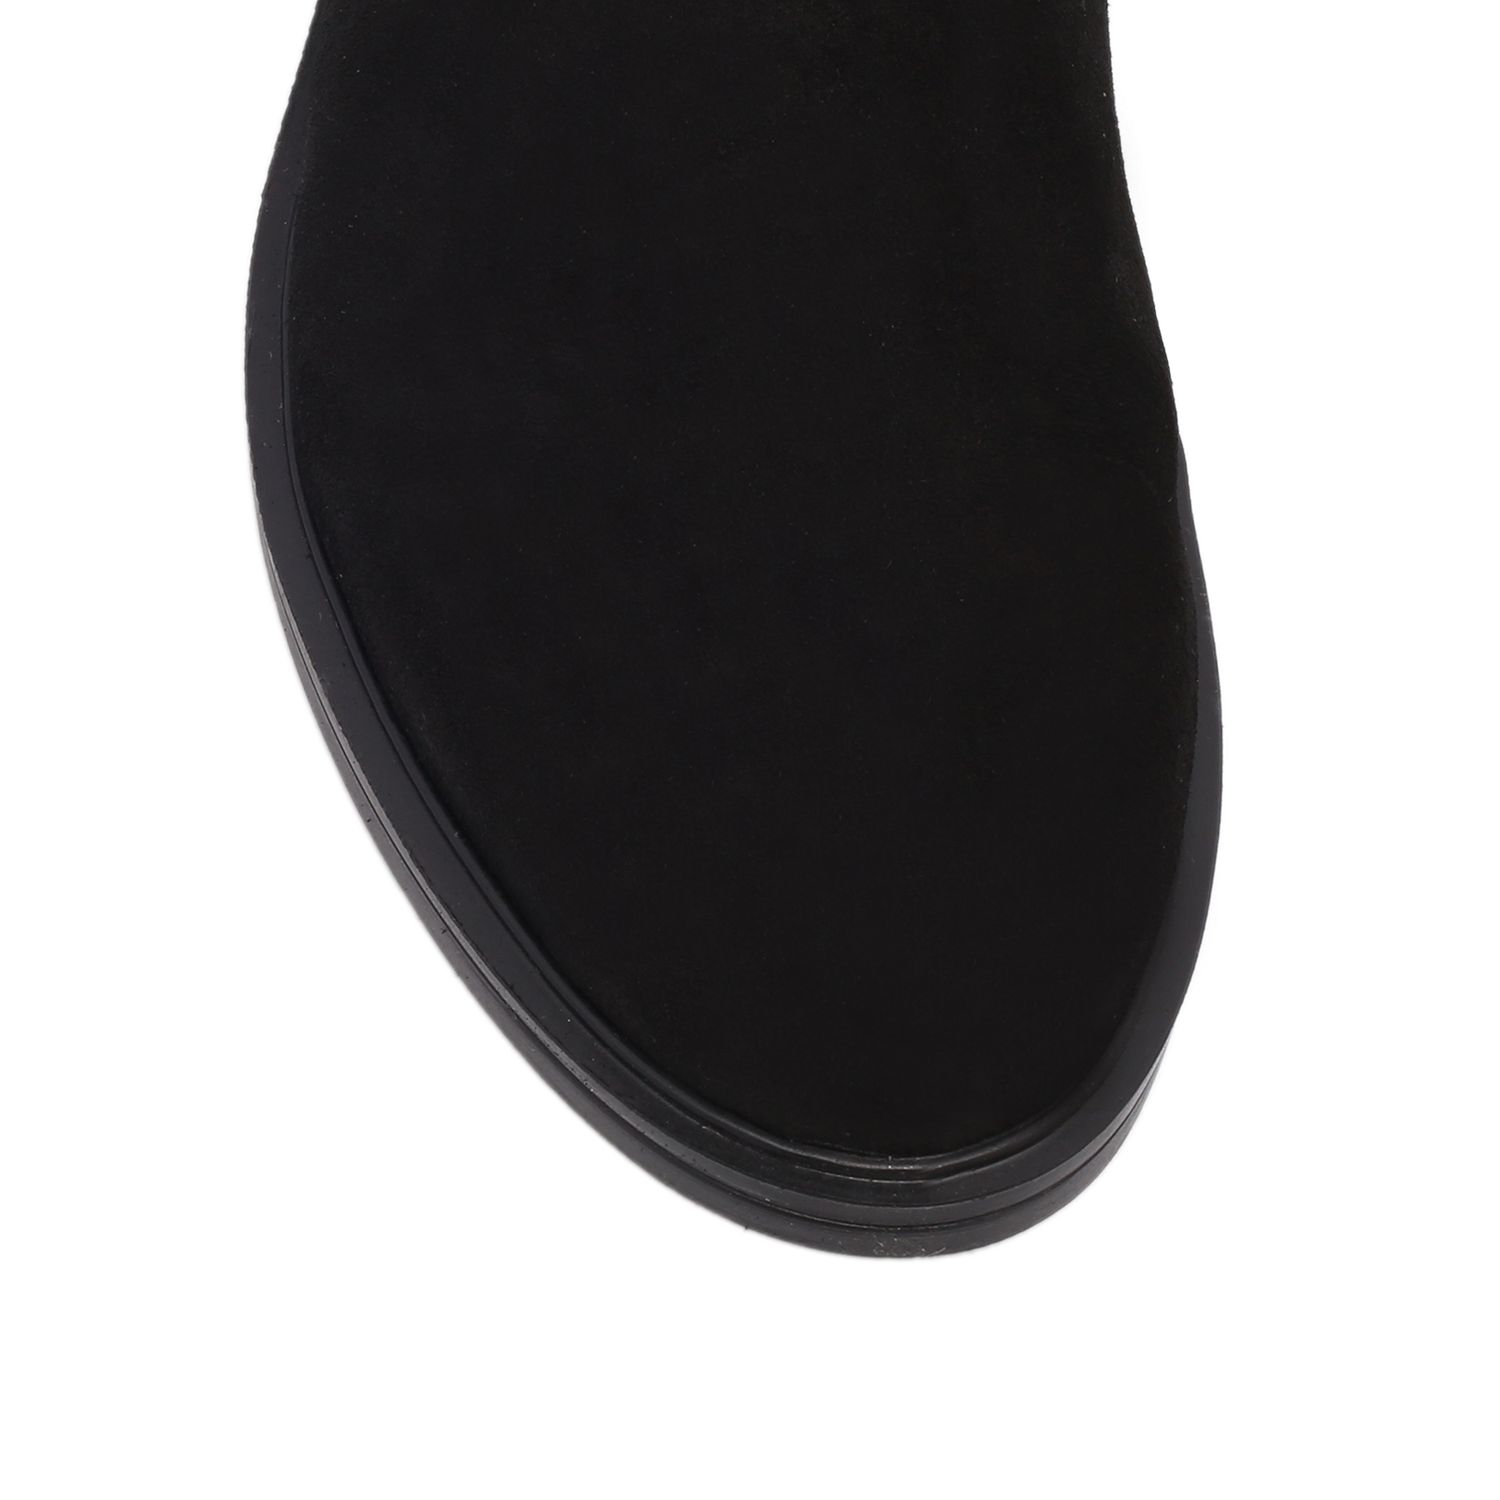 Carvela Walnut Suede Flat Knee High Boots, Black at John Lewis & Partners